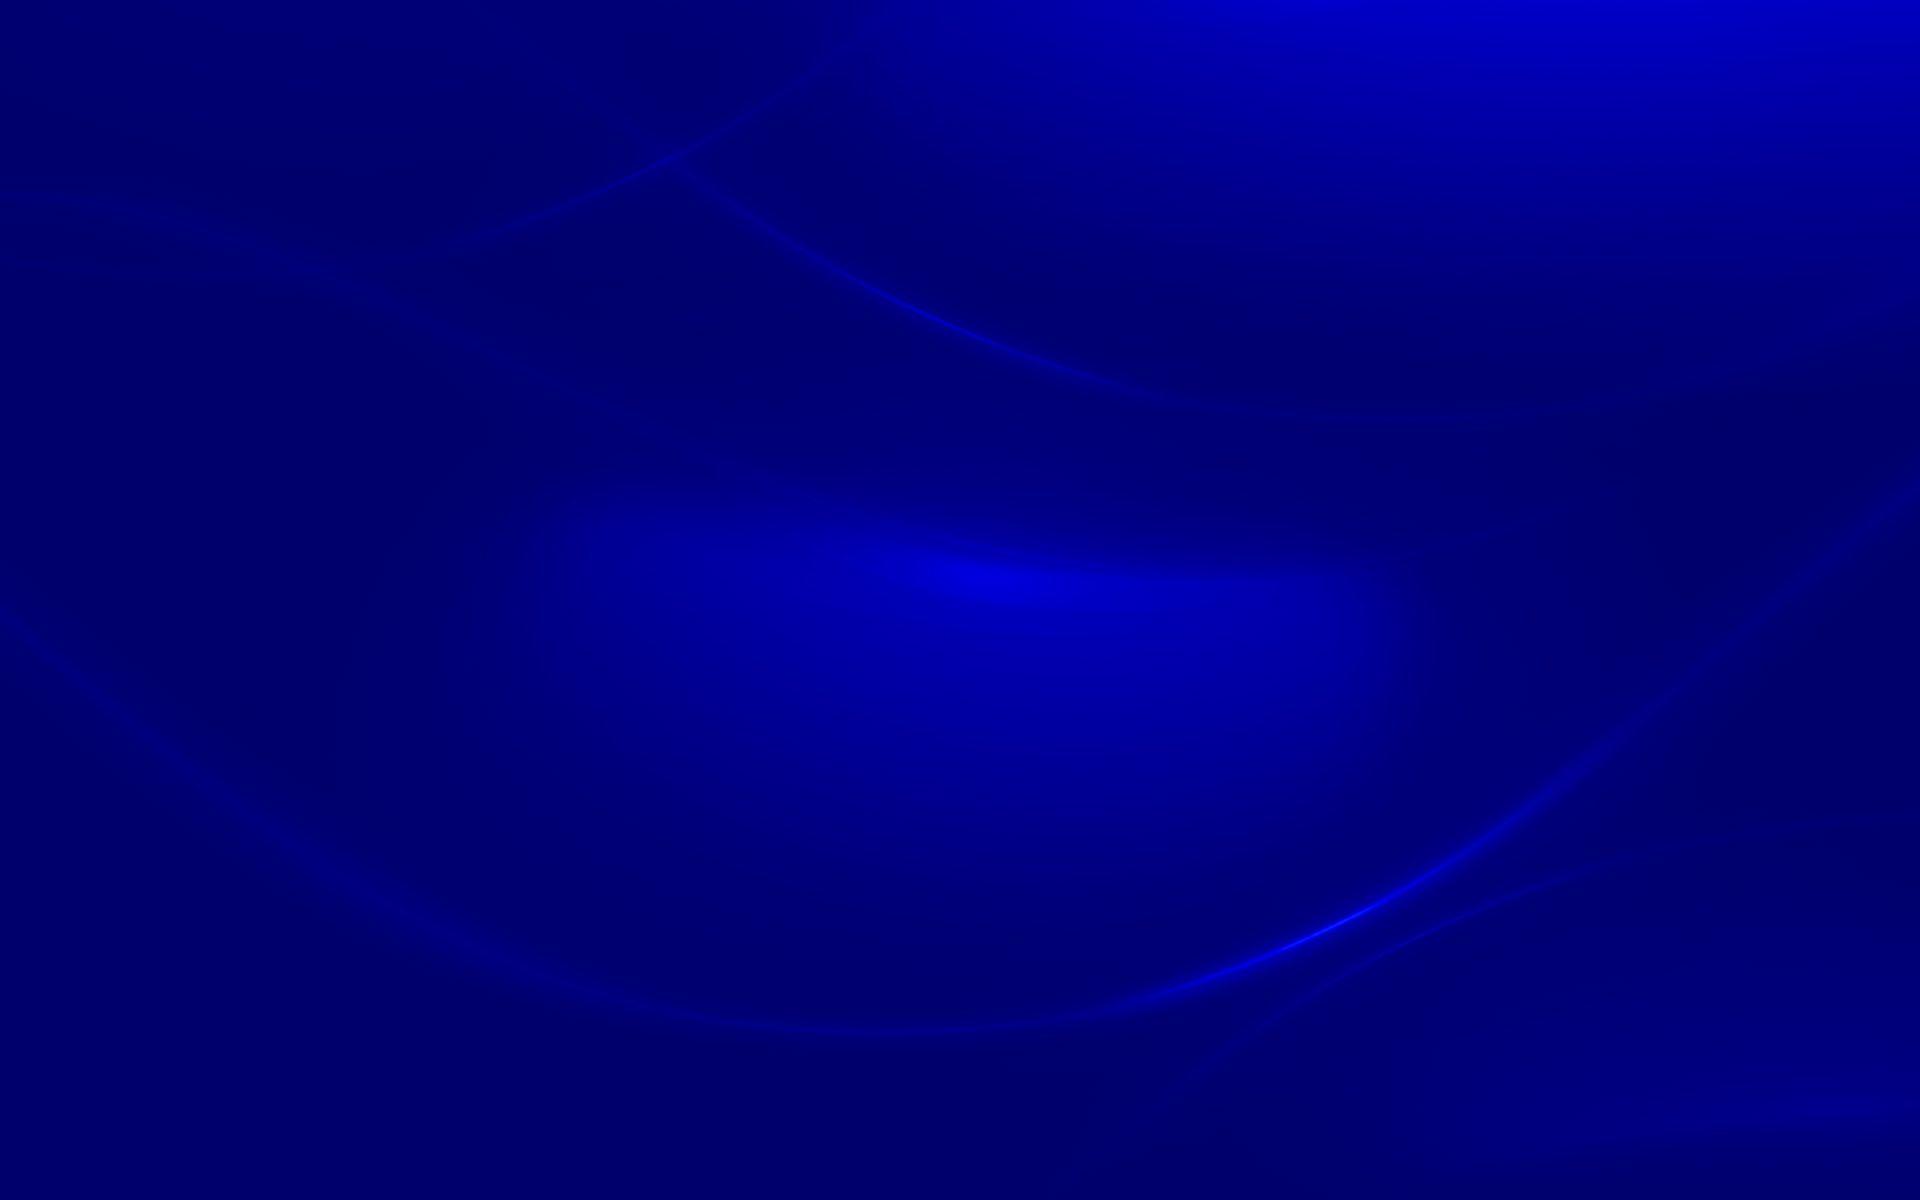 Windows Blue Phone Wallpaper On